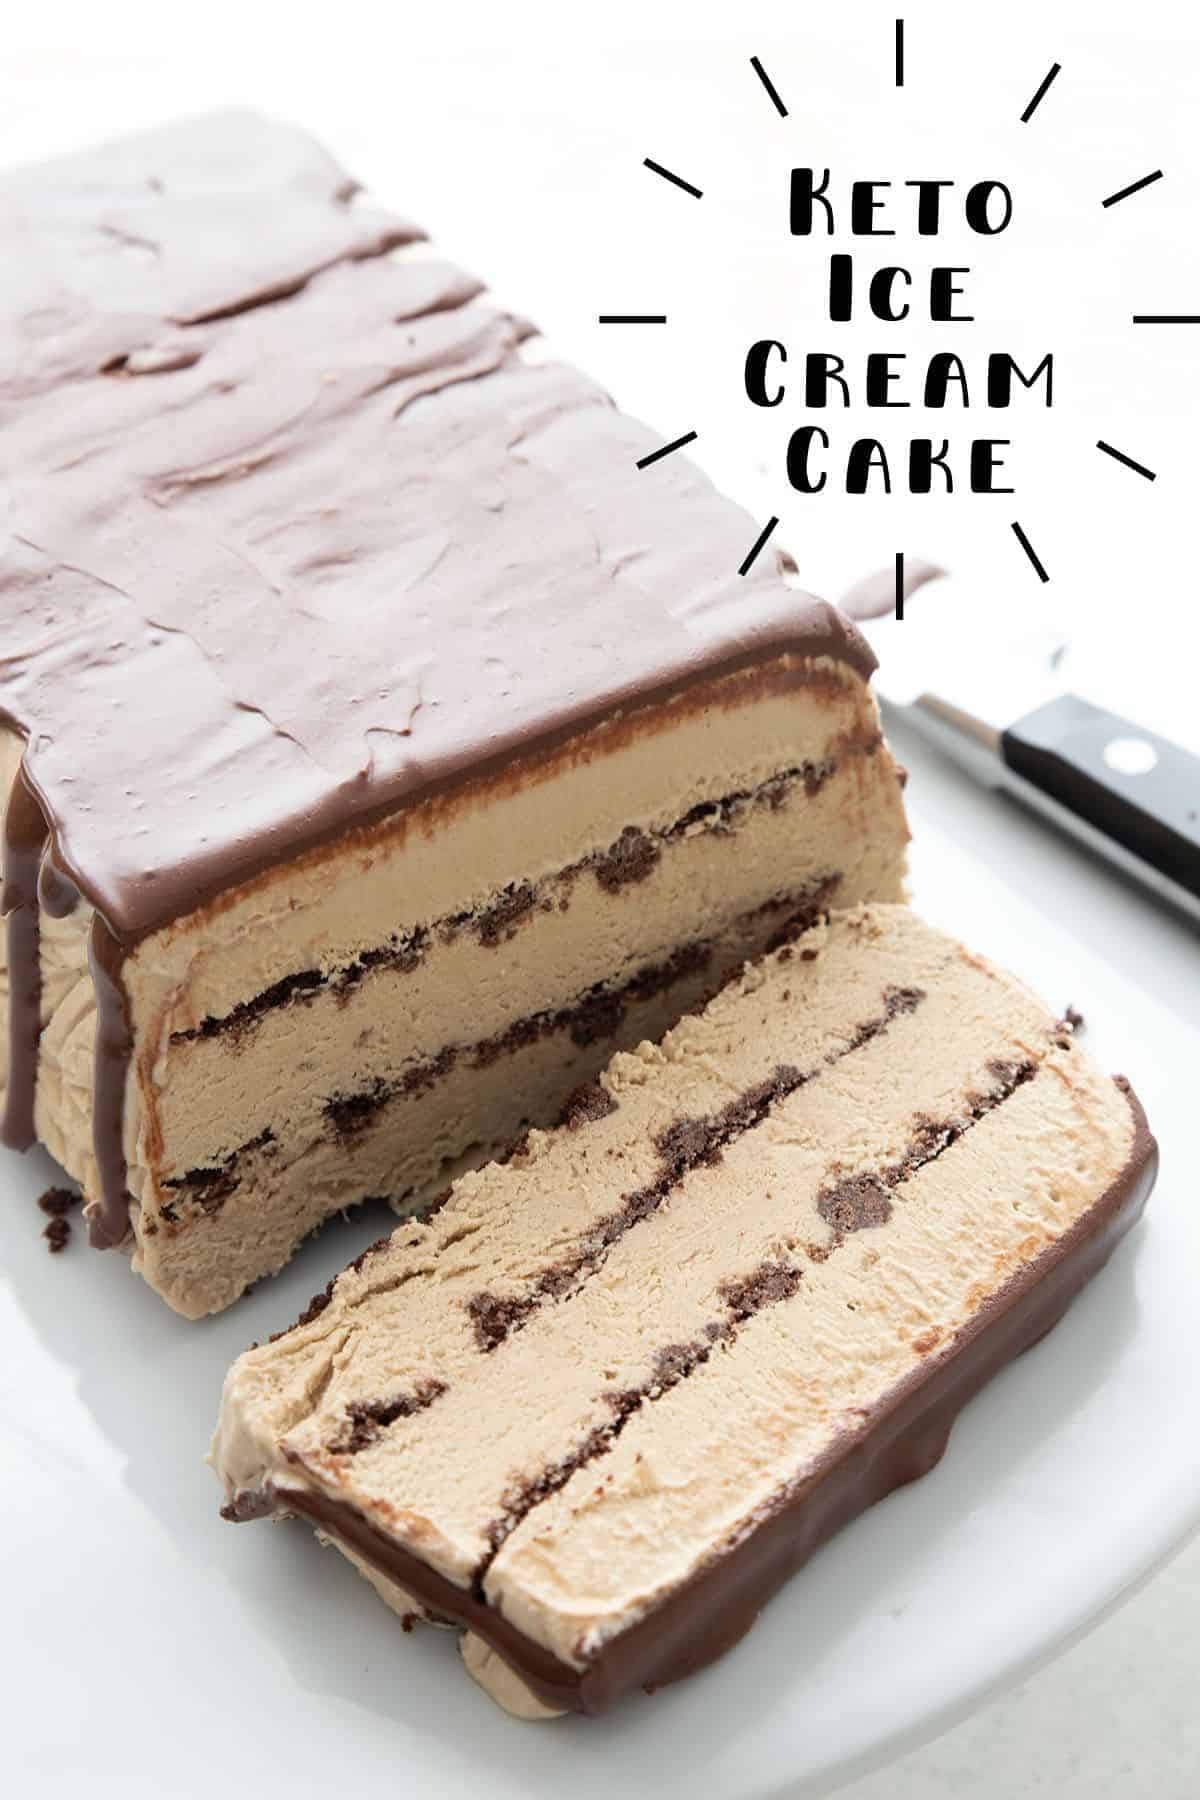 No-cook chocolate ice cream cake recipe